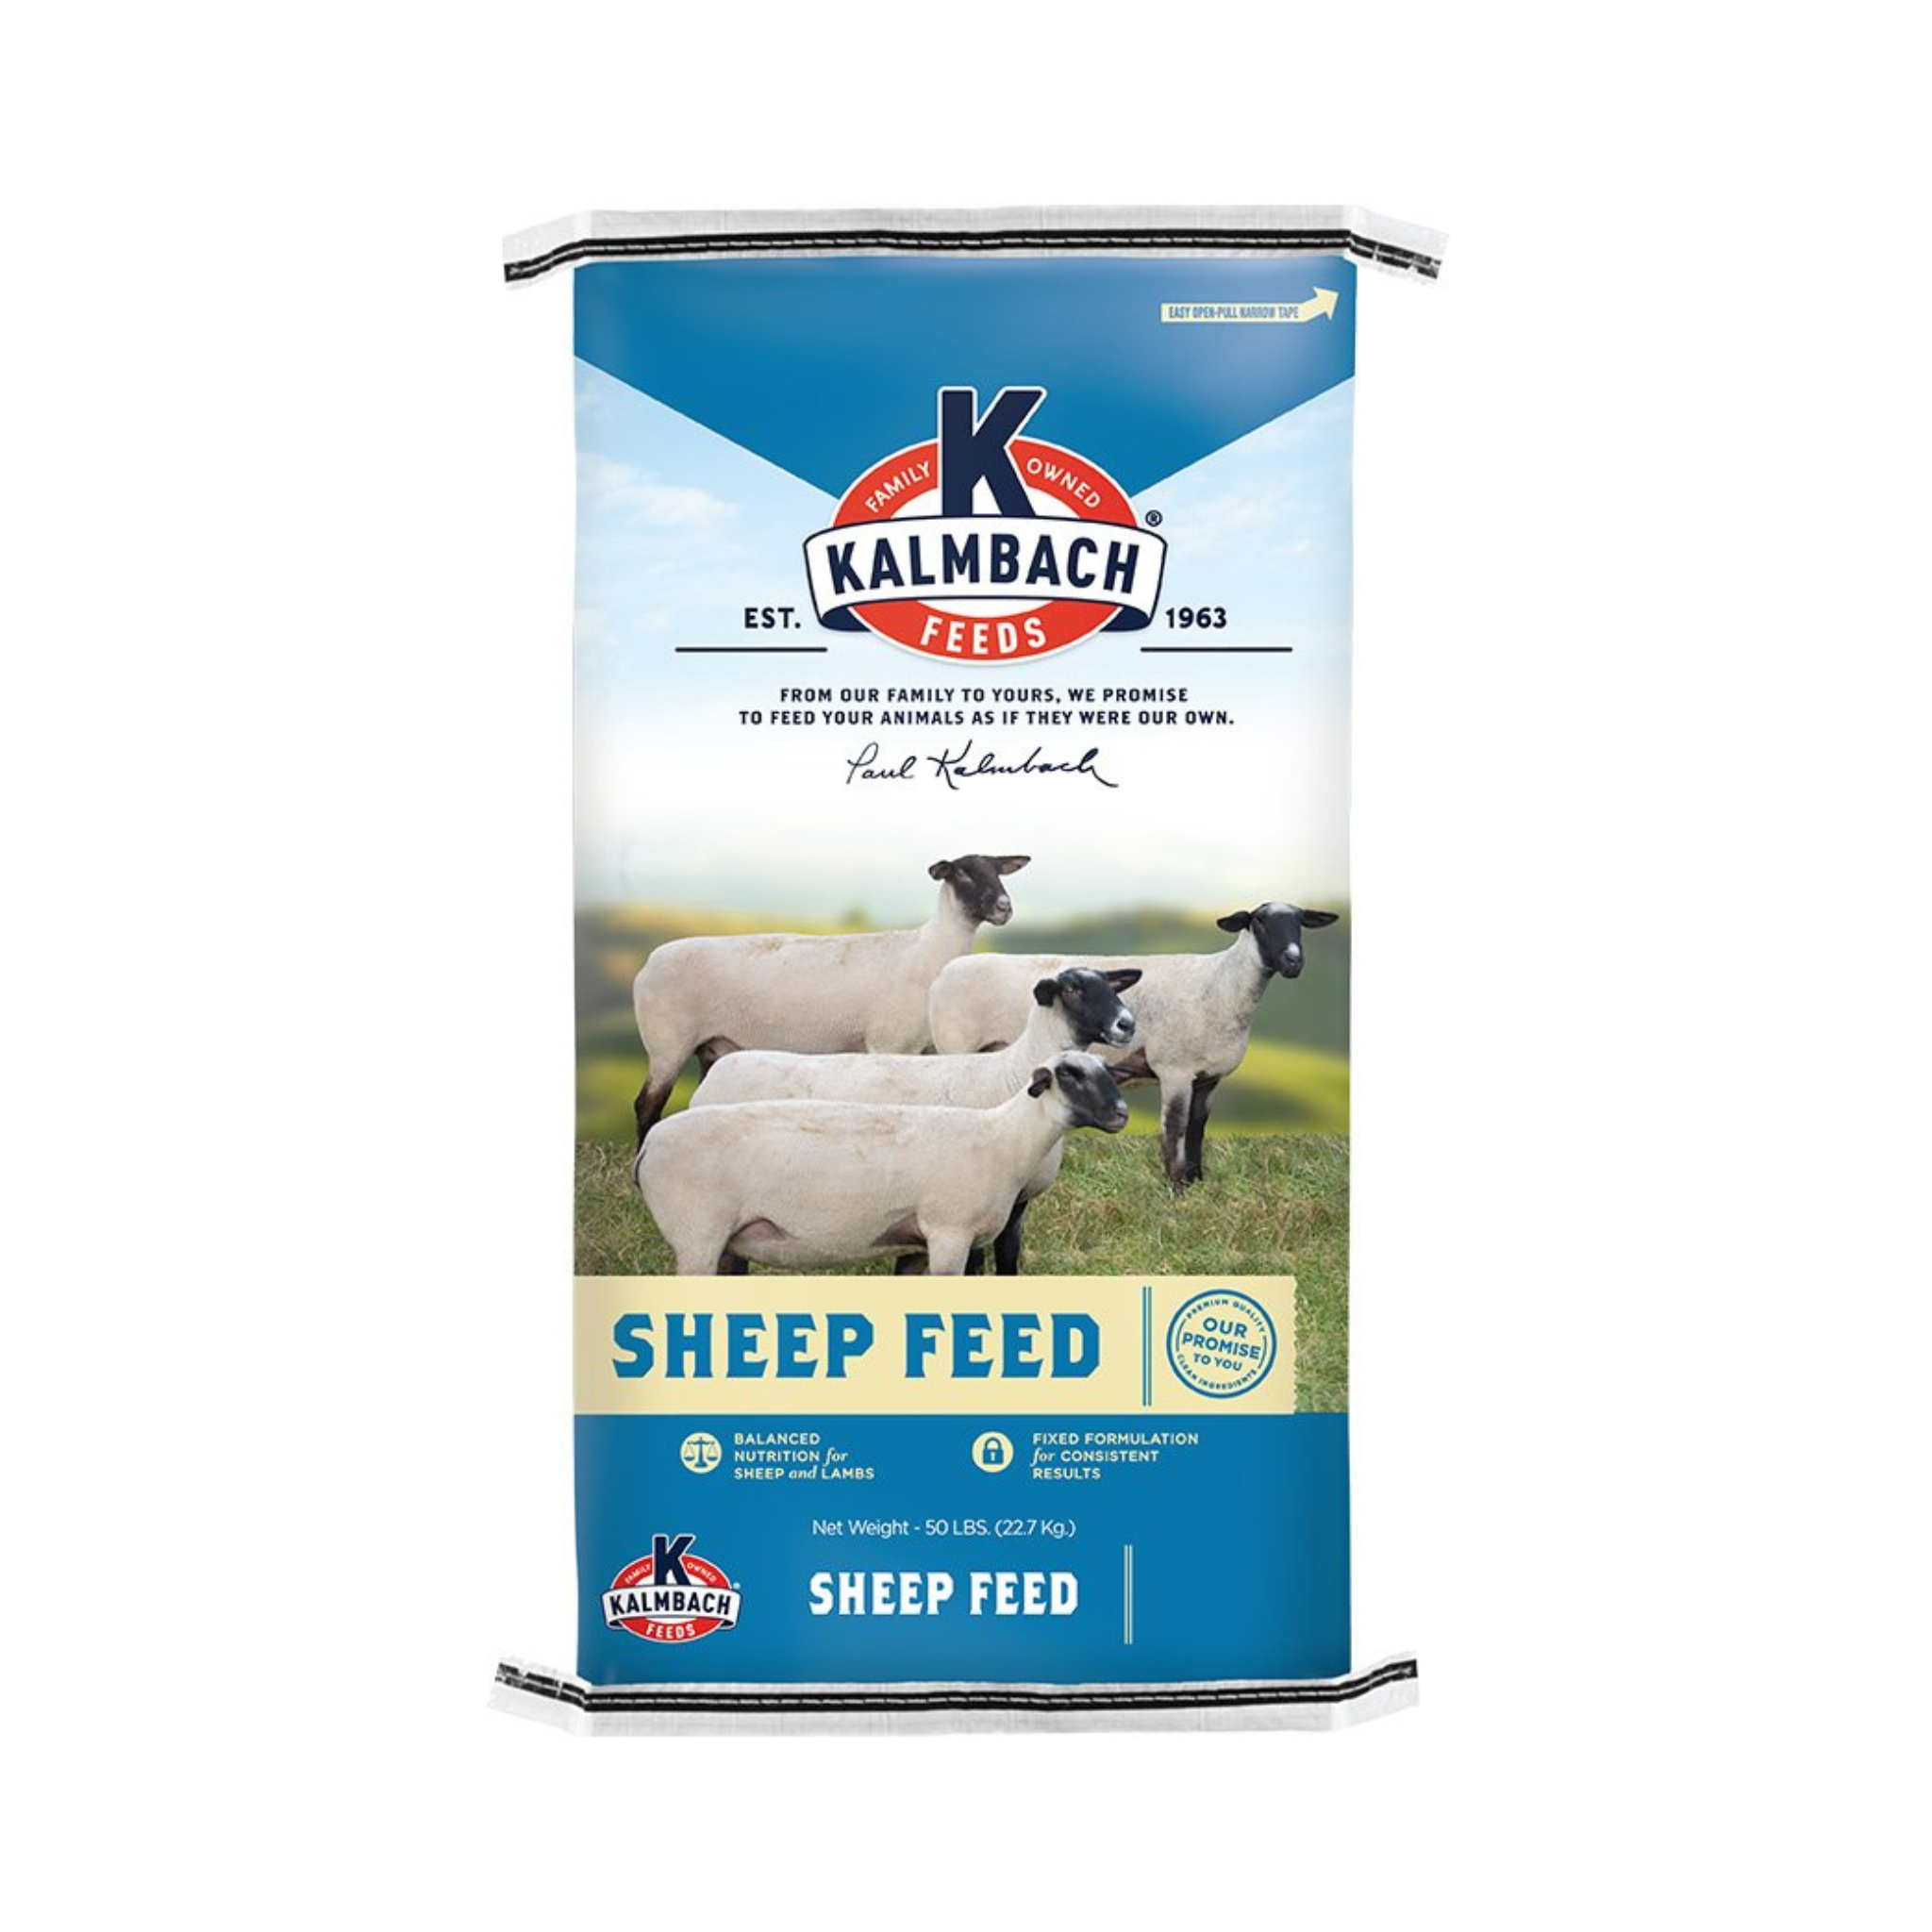 Kalmbach Feeds 15% Ewe Maintainer Sheep Feed